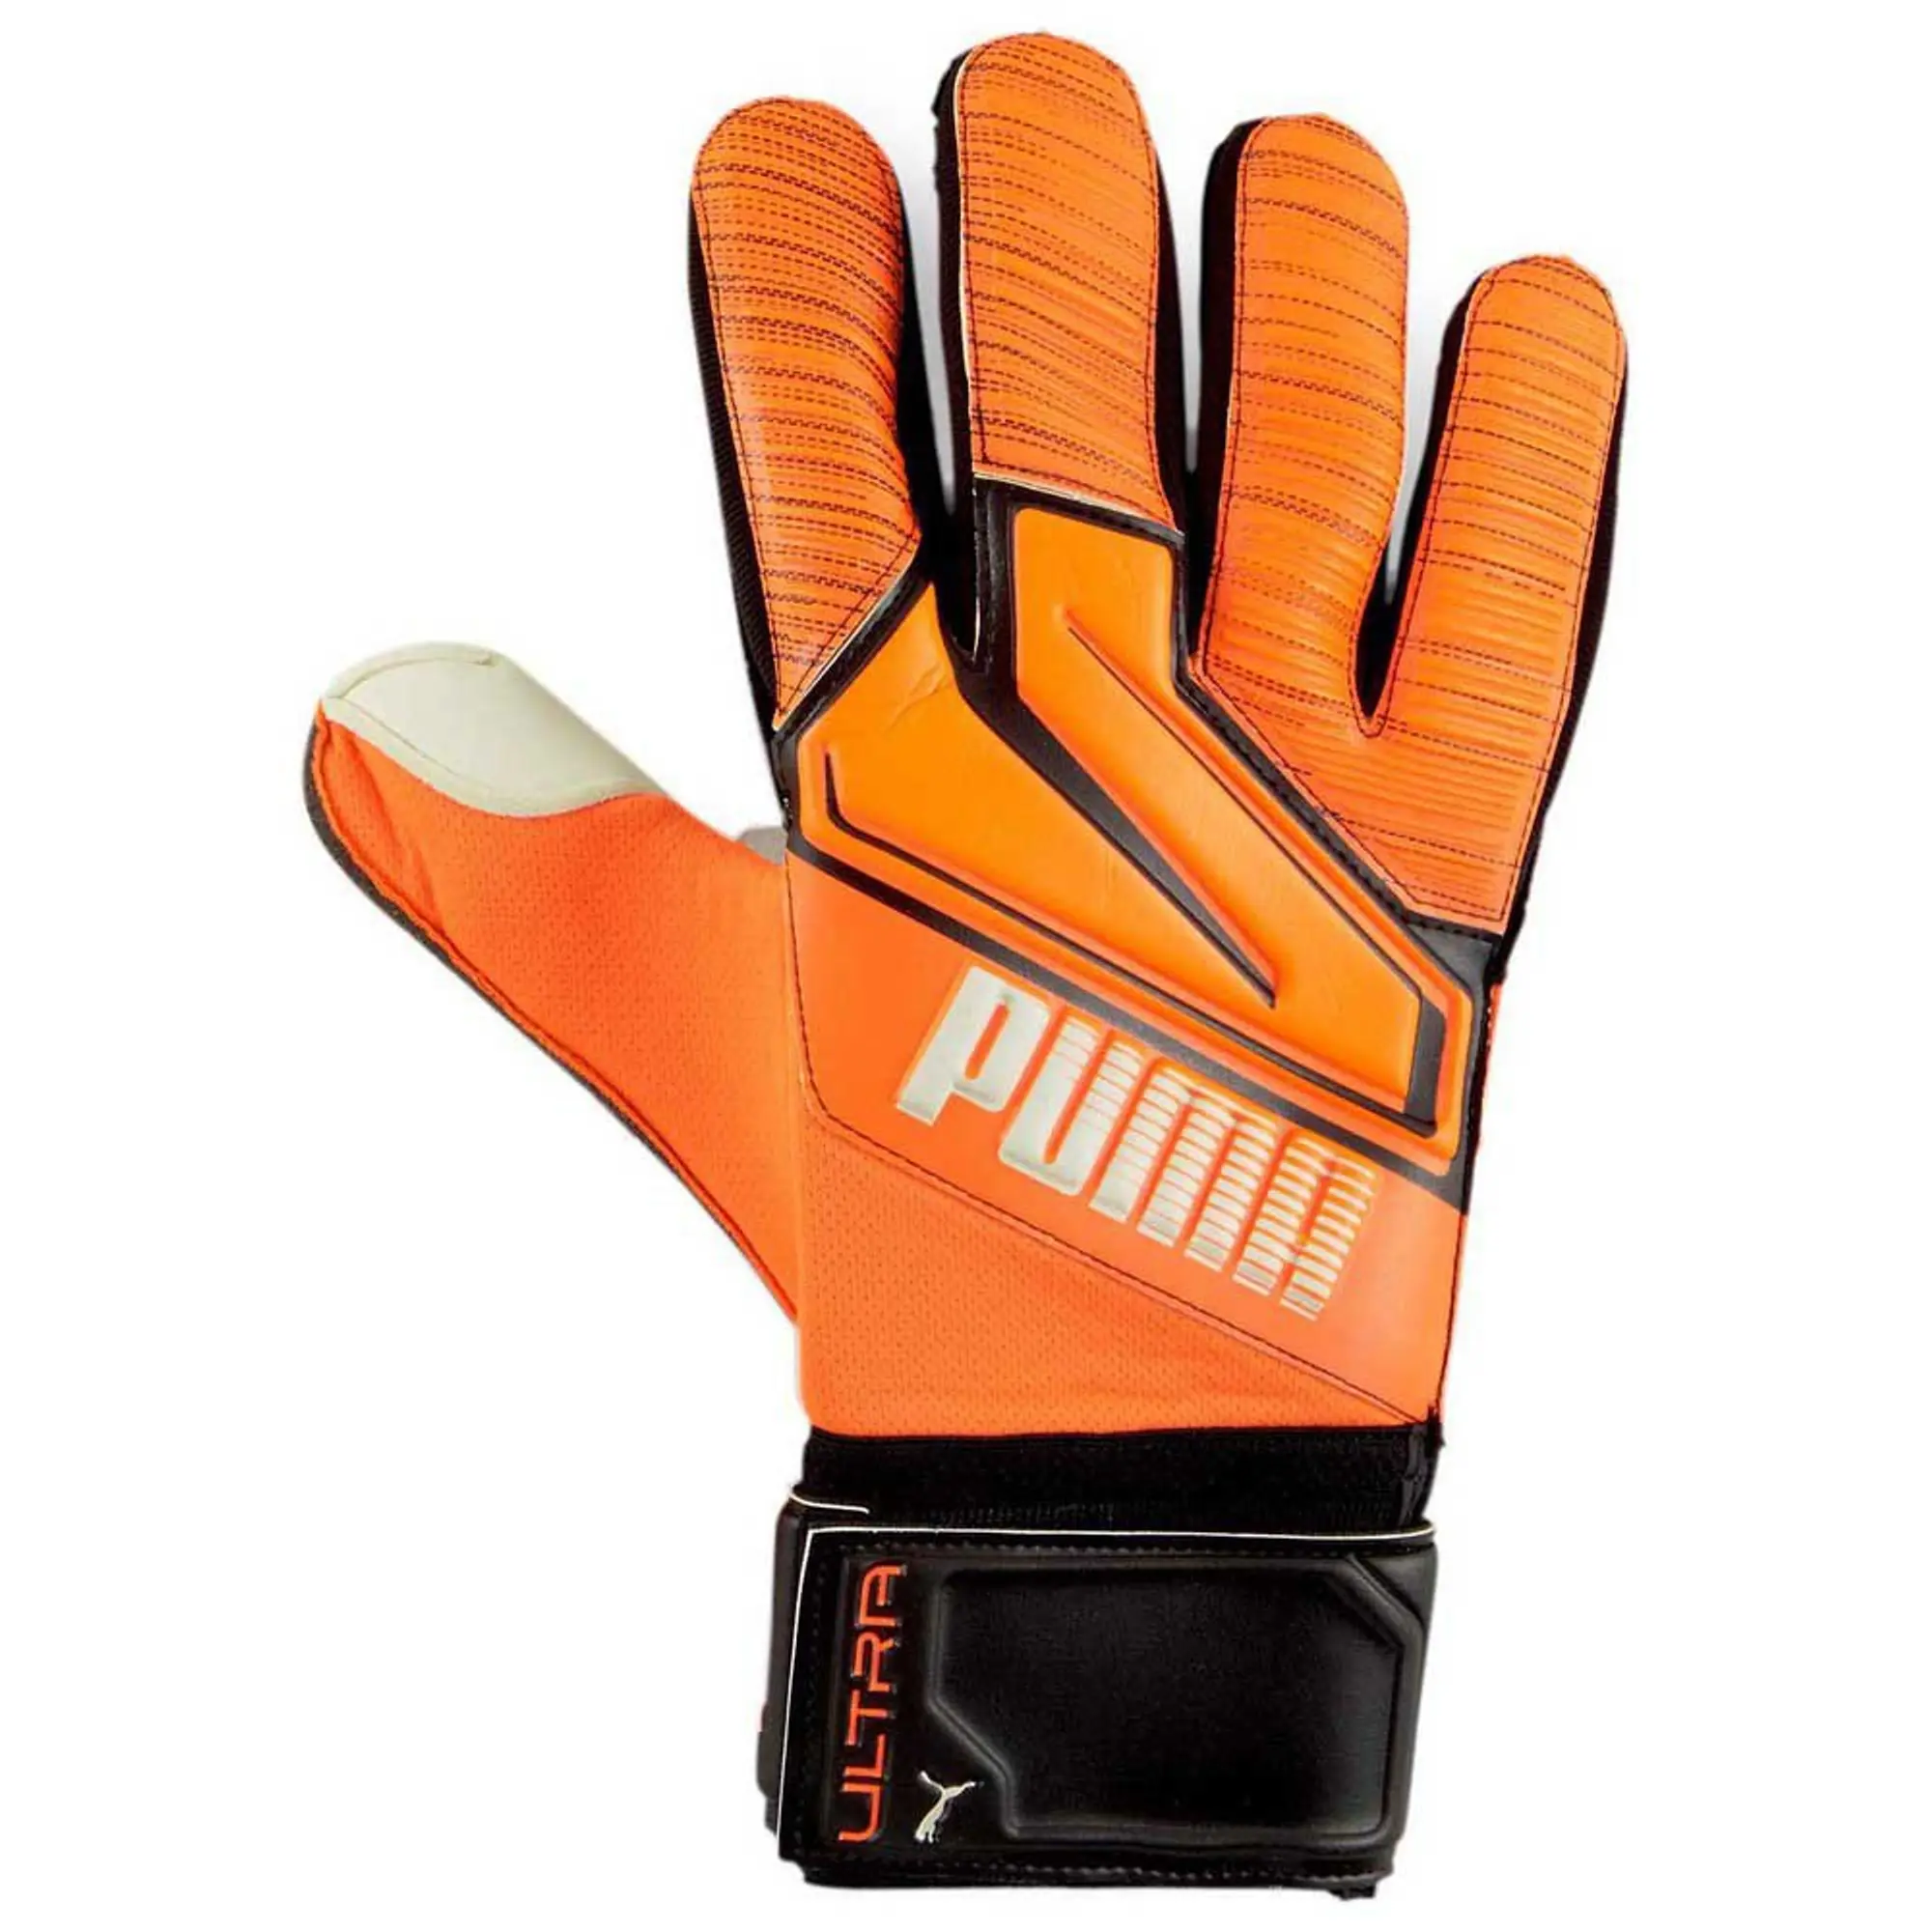 Puma Ultra Grip 1 Rc Chasing Adrenaline Pack Goalkeeper Gloves  - Orange,Black